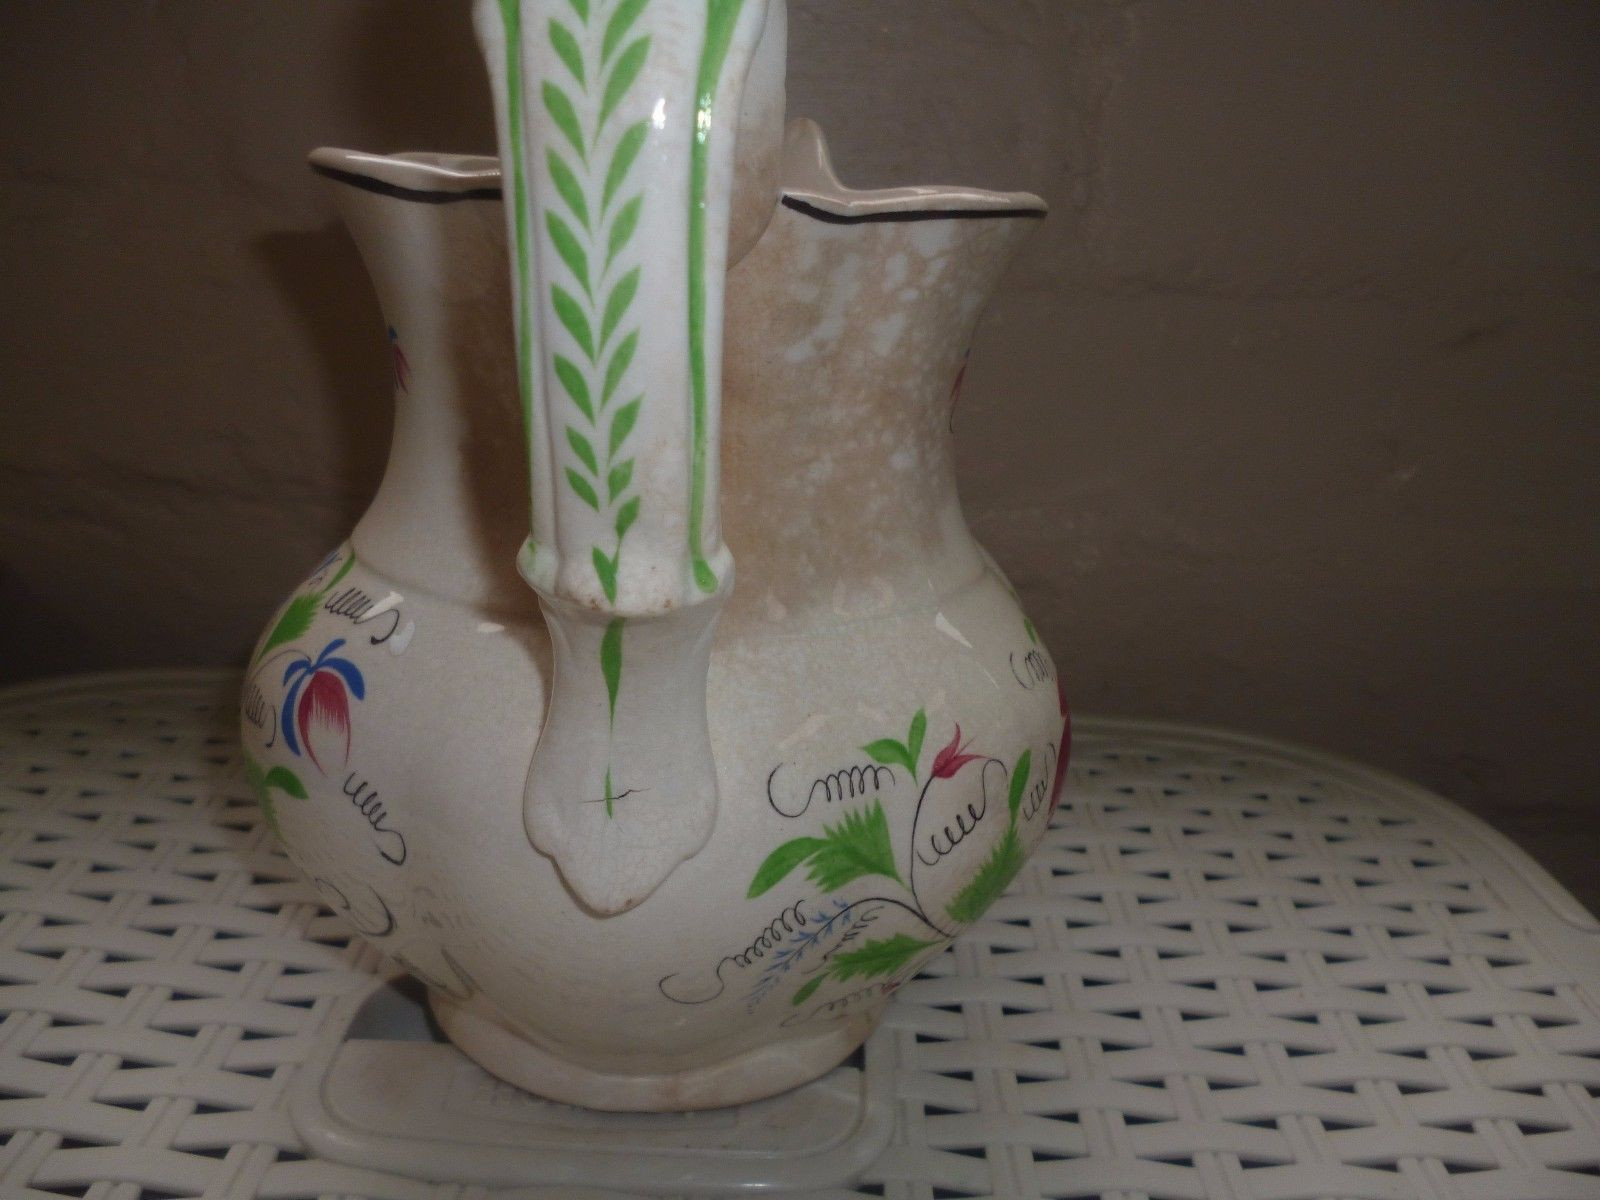 tin pitcher vase of staffordshire decorative jug 1843 alcock and sons cobridge ebay regarding staffordshire decorative jug 1843 alcock and sons cobridge ebay